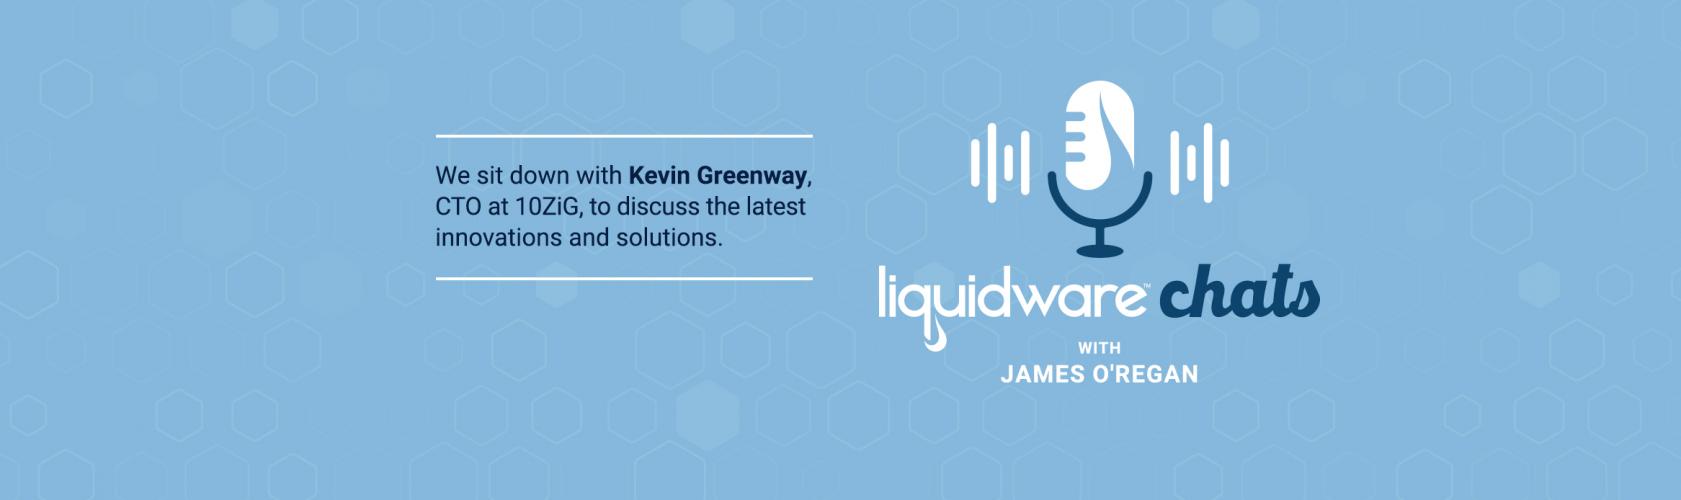 Liquidware Chats Podcast